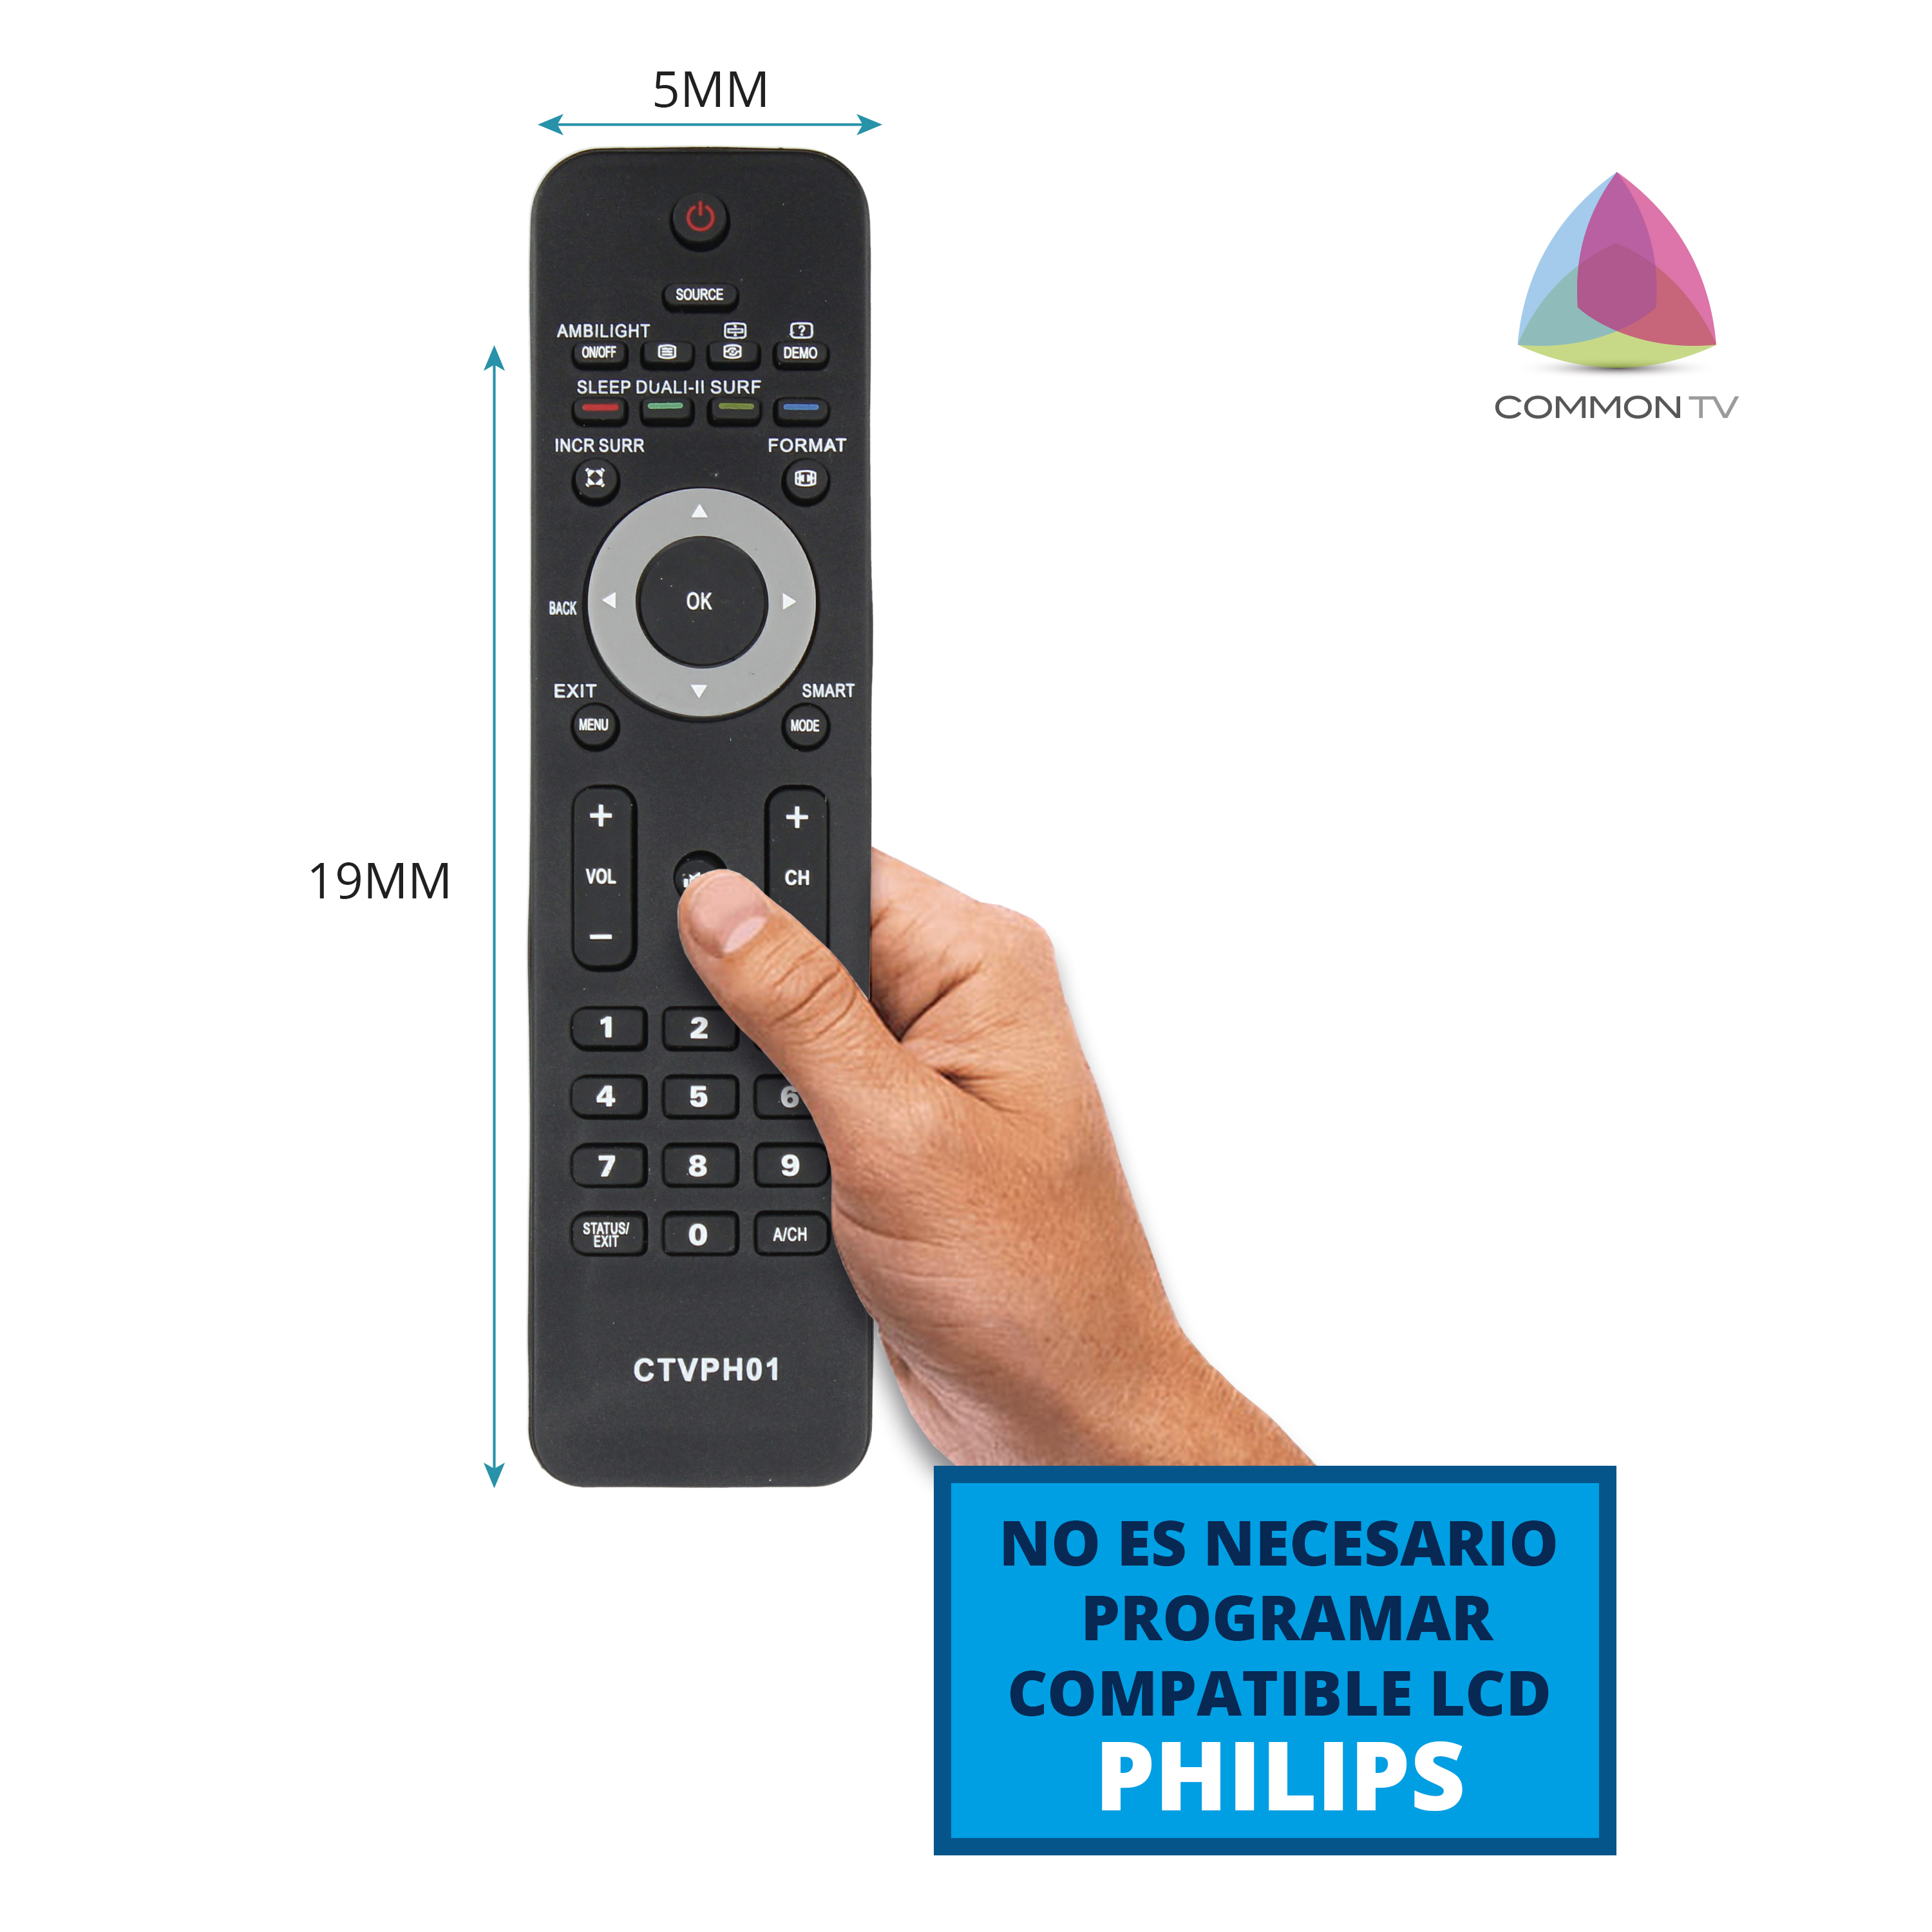 Mando a distancia Tv Philips CRP606/01 - Original Remote Control - FERSAY